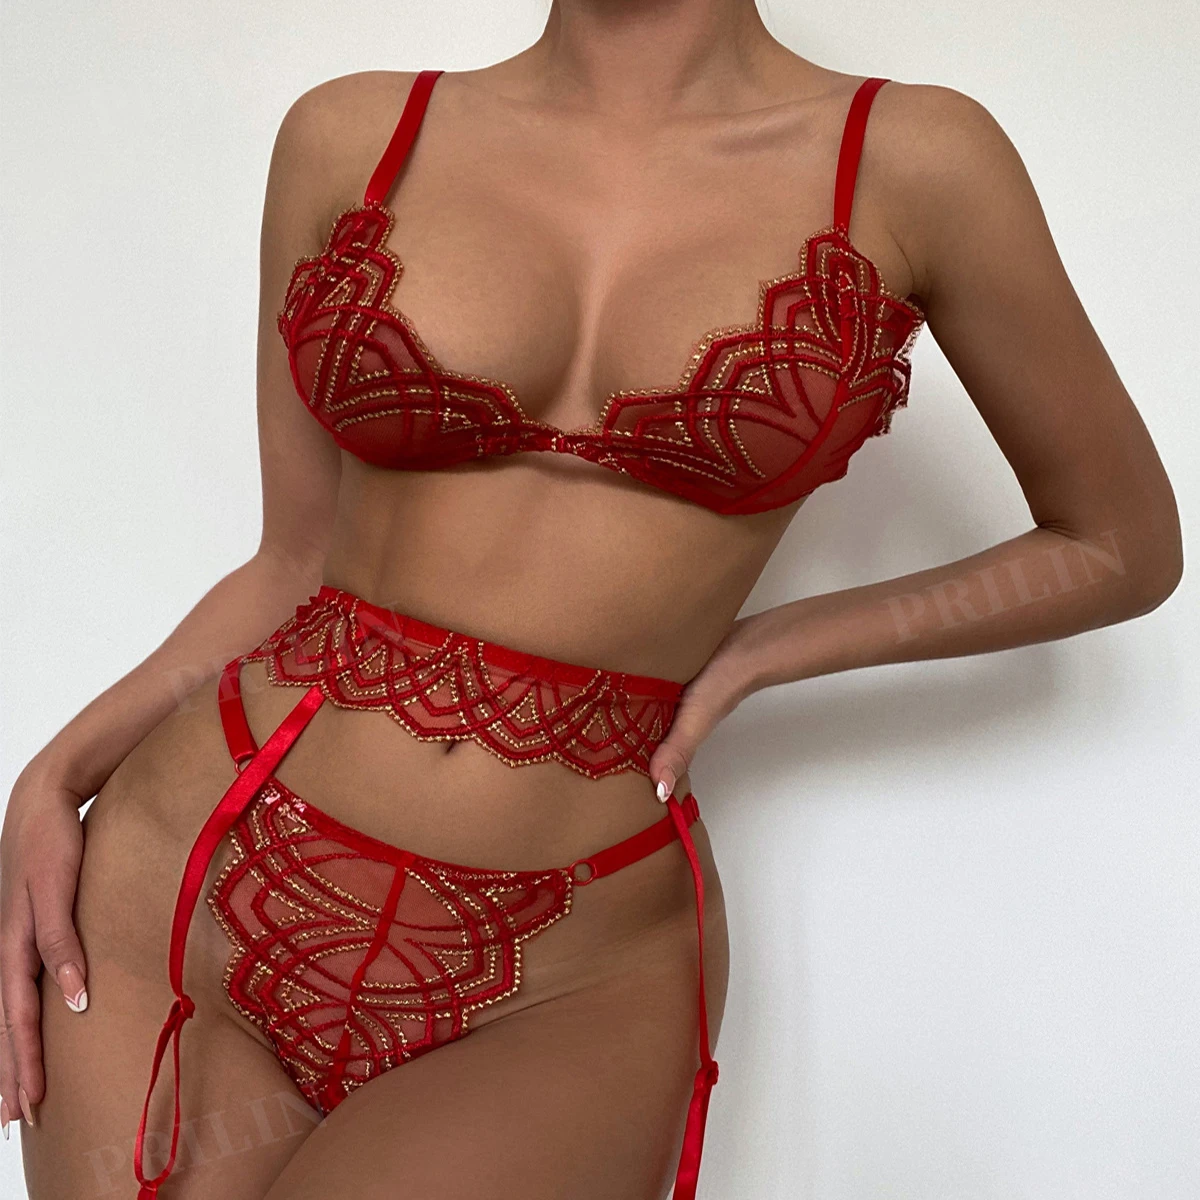 

3 Piece Women'S Sexy Mesh Saint Valentin See Through Lingeries Bow Floral Embroidery Knit Suspender Belt Lingerie Set